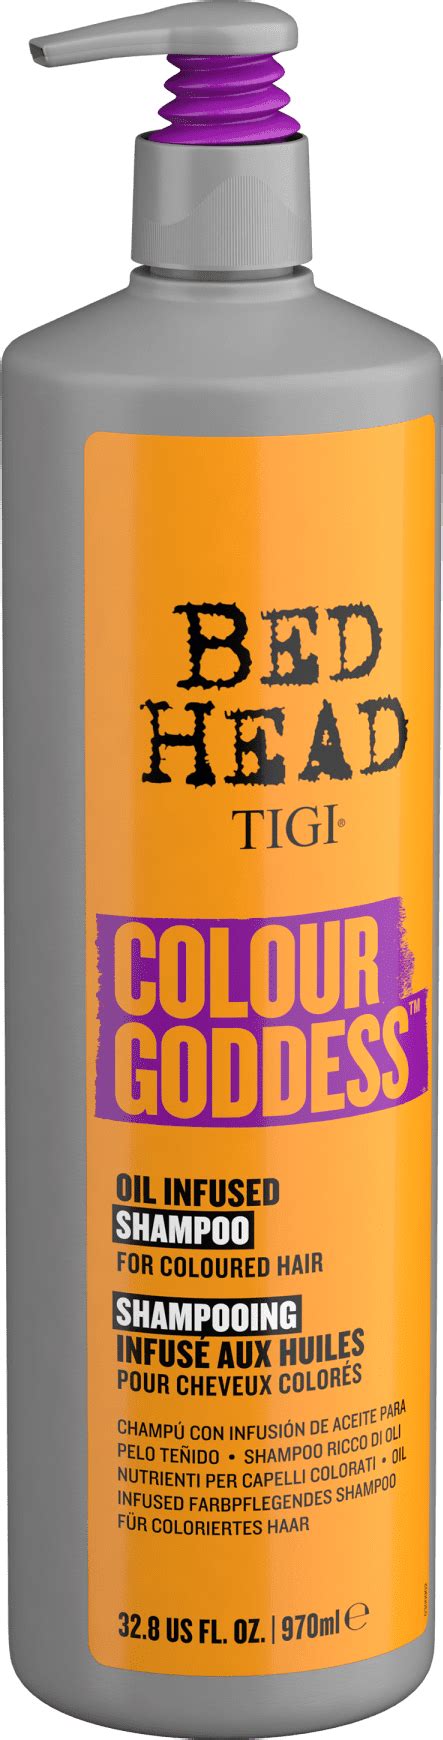 Shampoo Tigi Bed Head Colour Goddess Beautybox